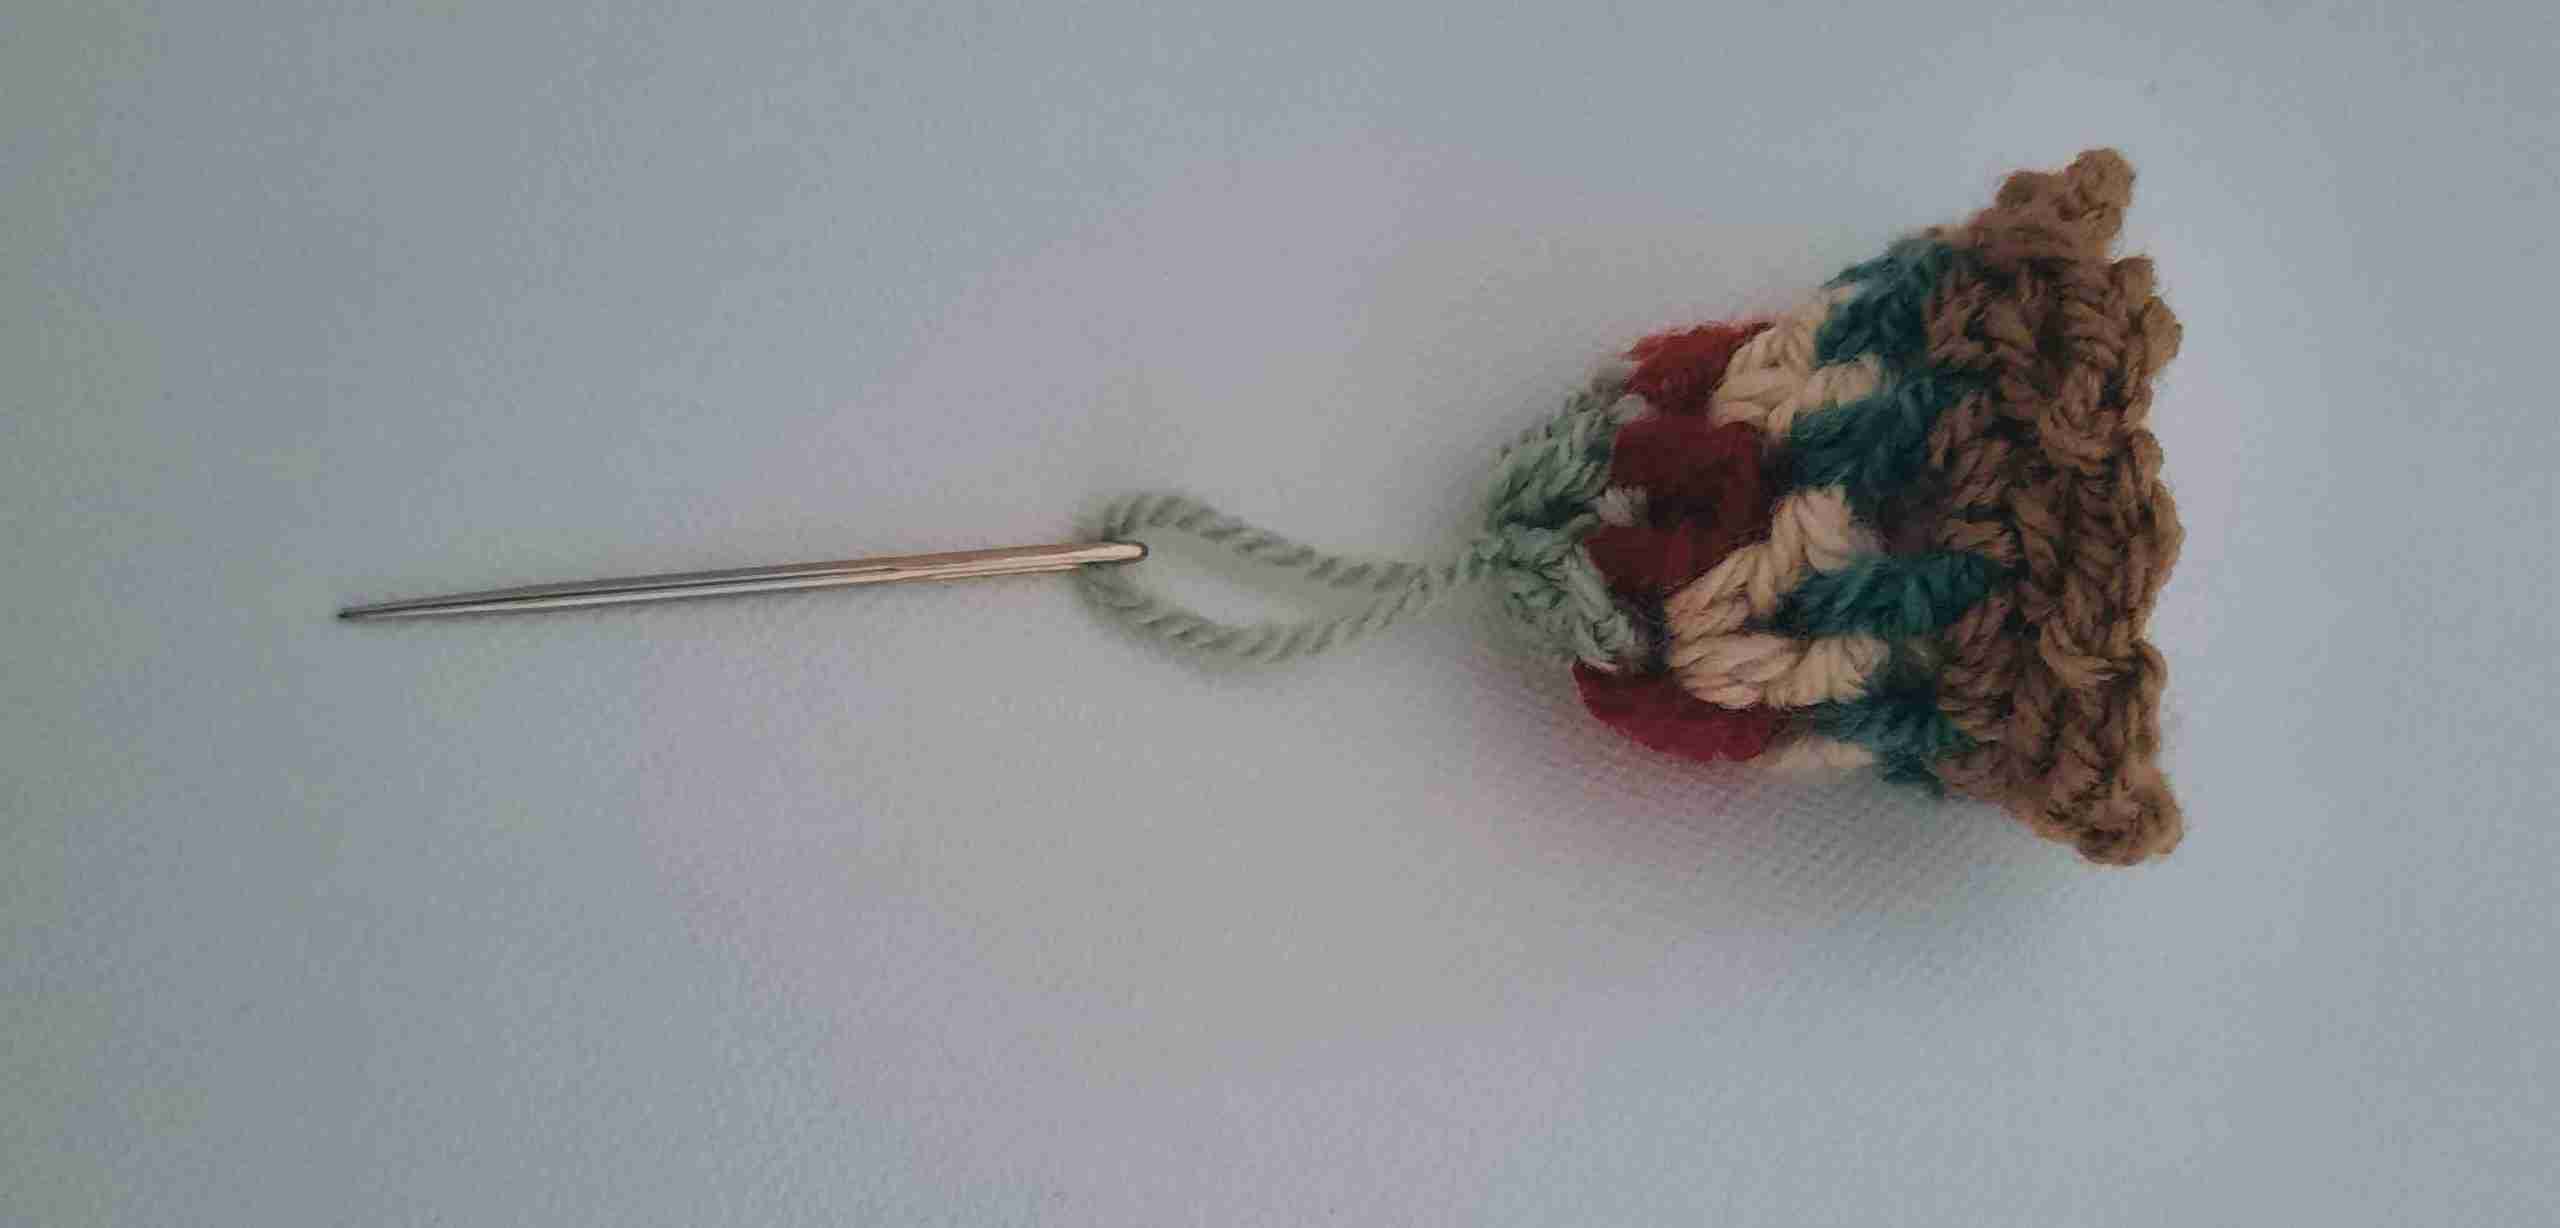 Crochet Christmas Bells Free Pattern